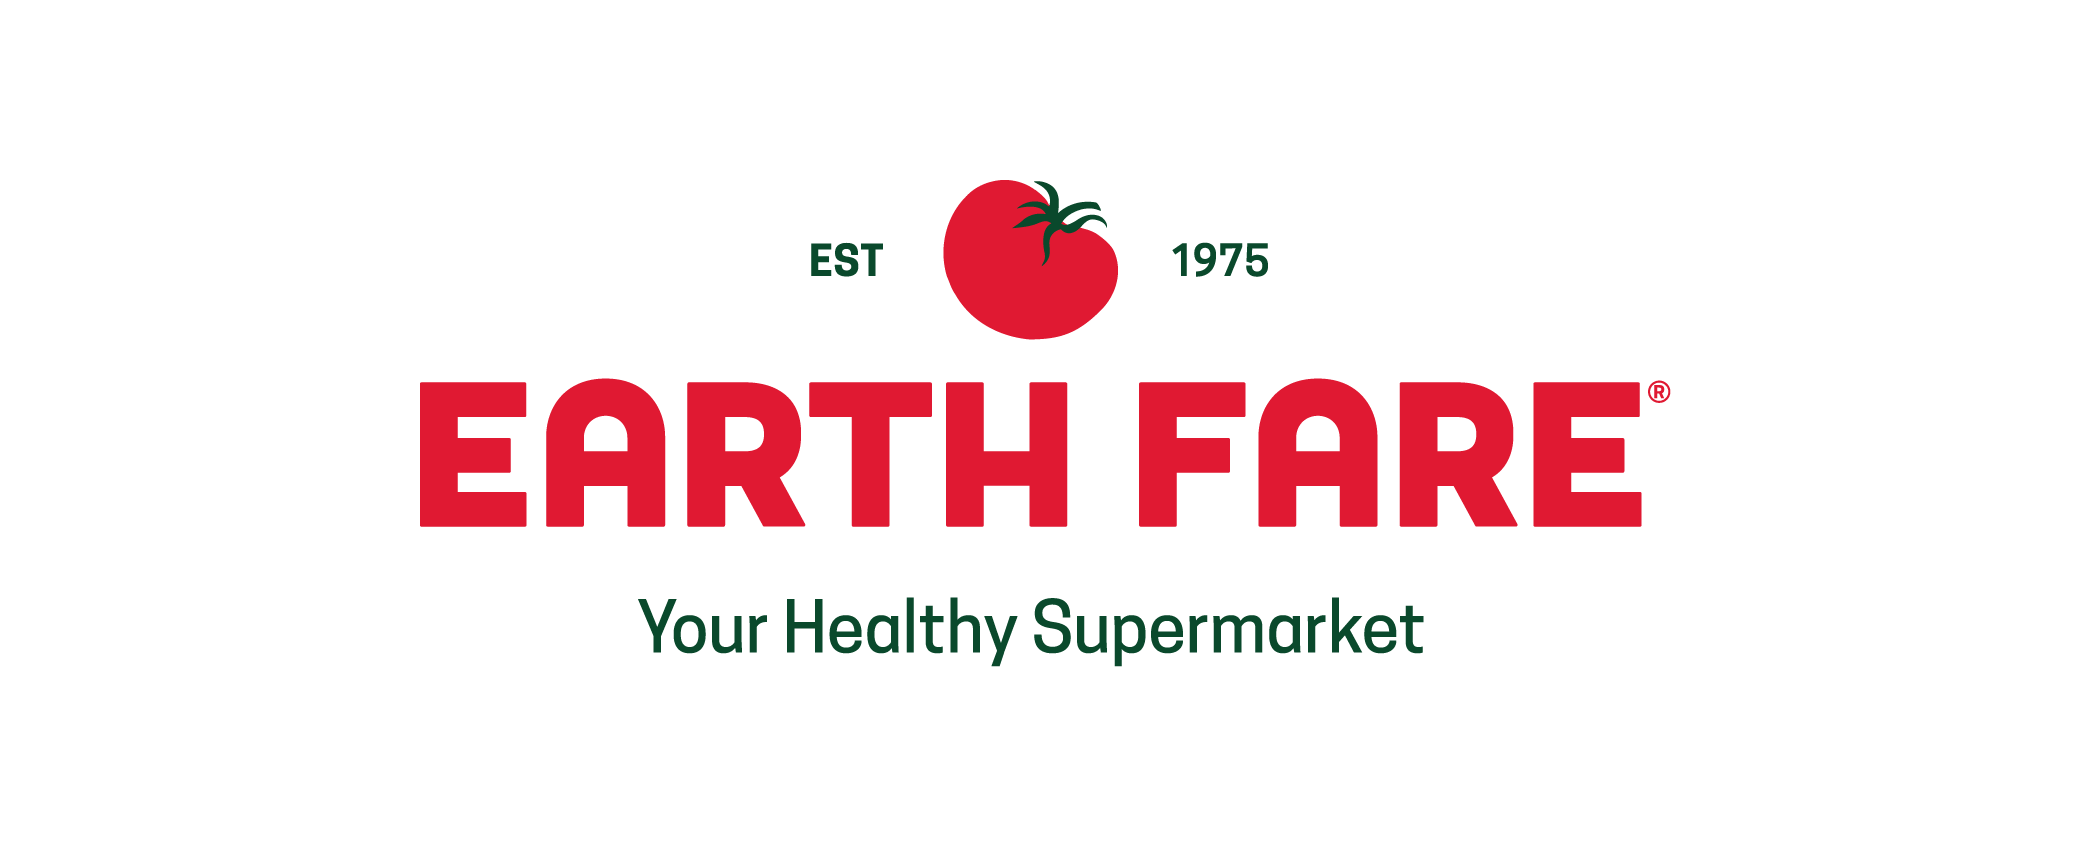 earthfare-logo